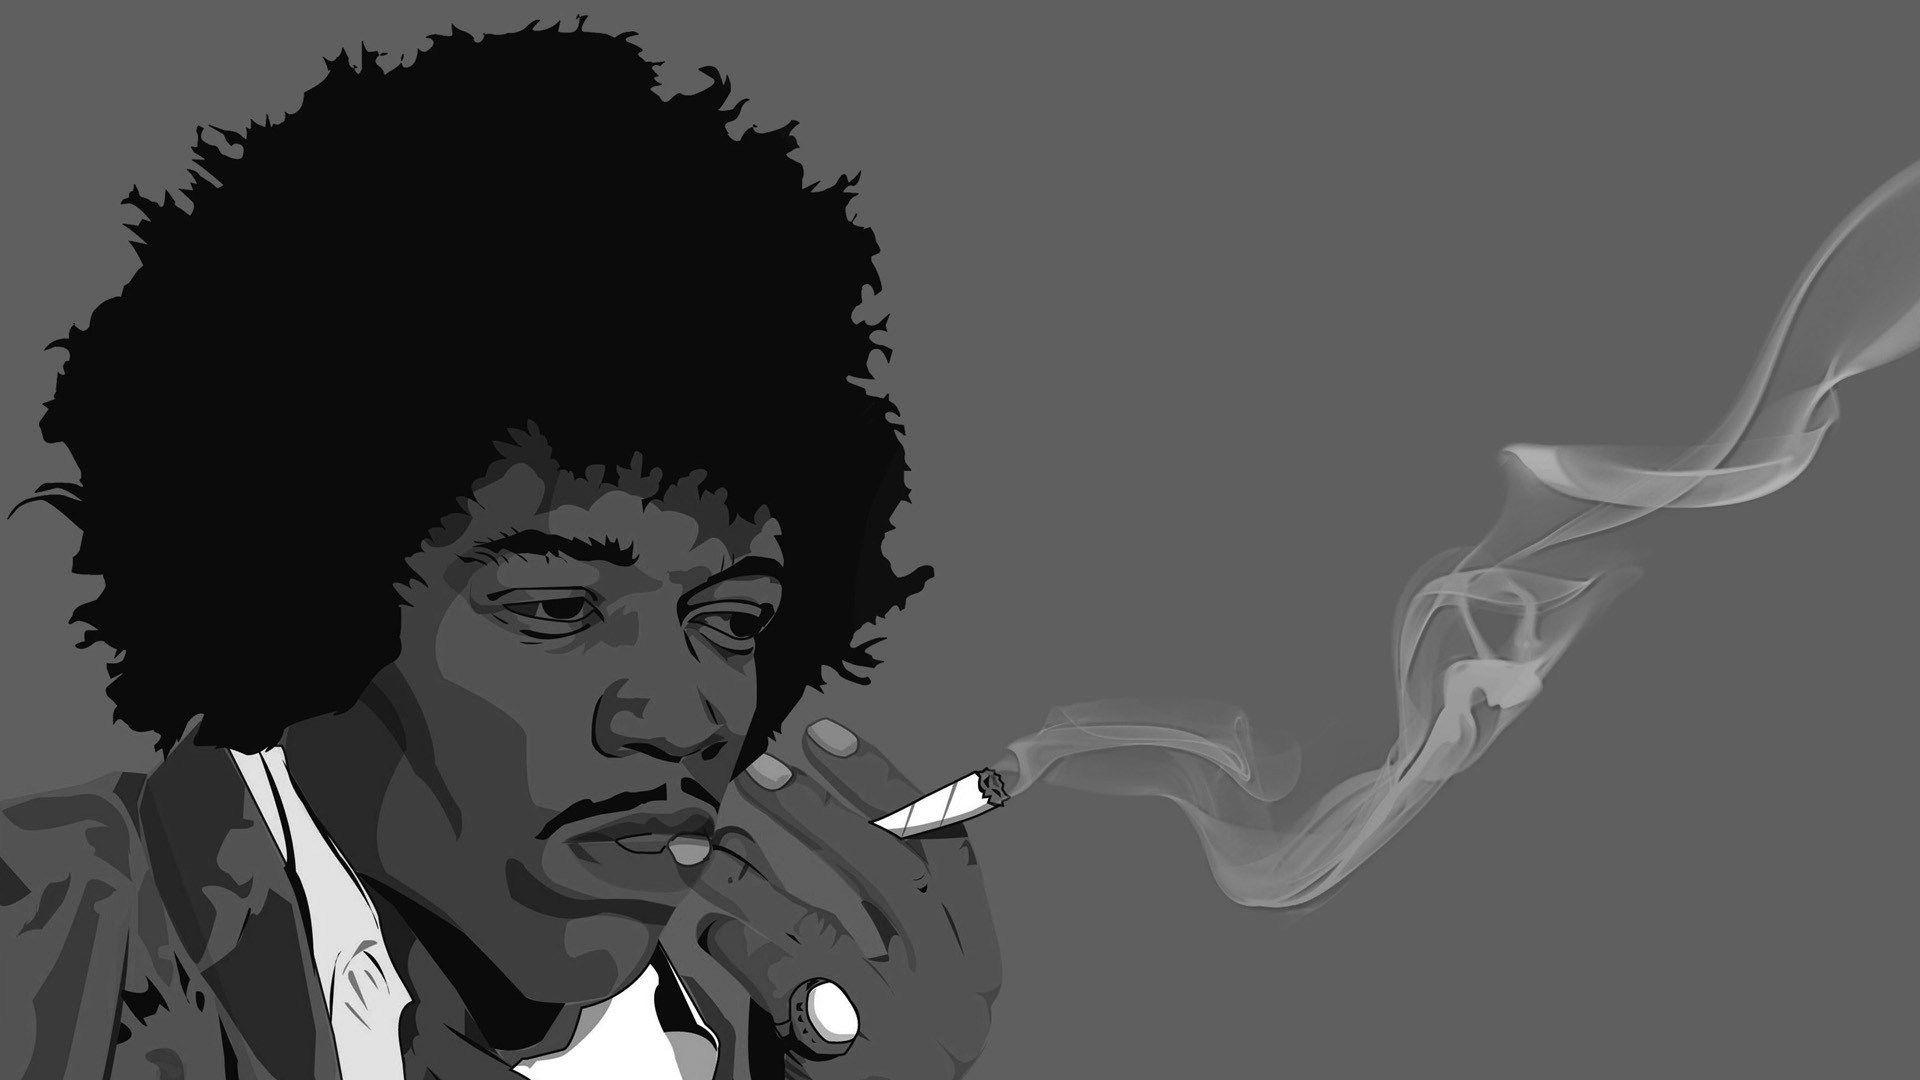 Jimi Hendrix wallpaper and background